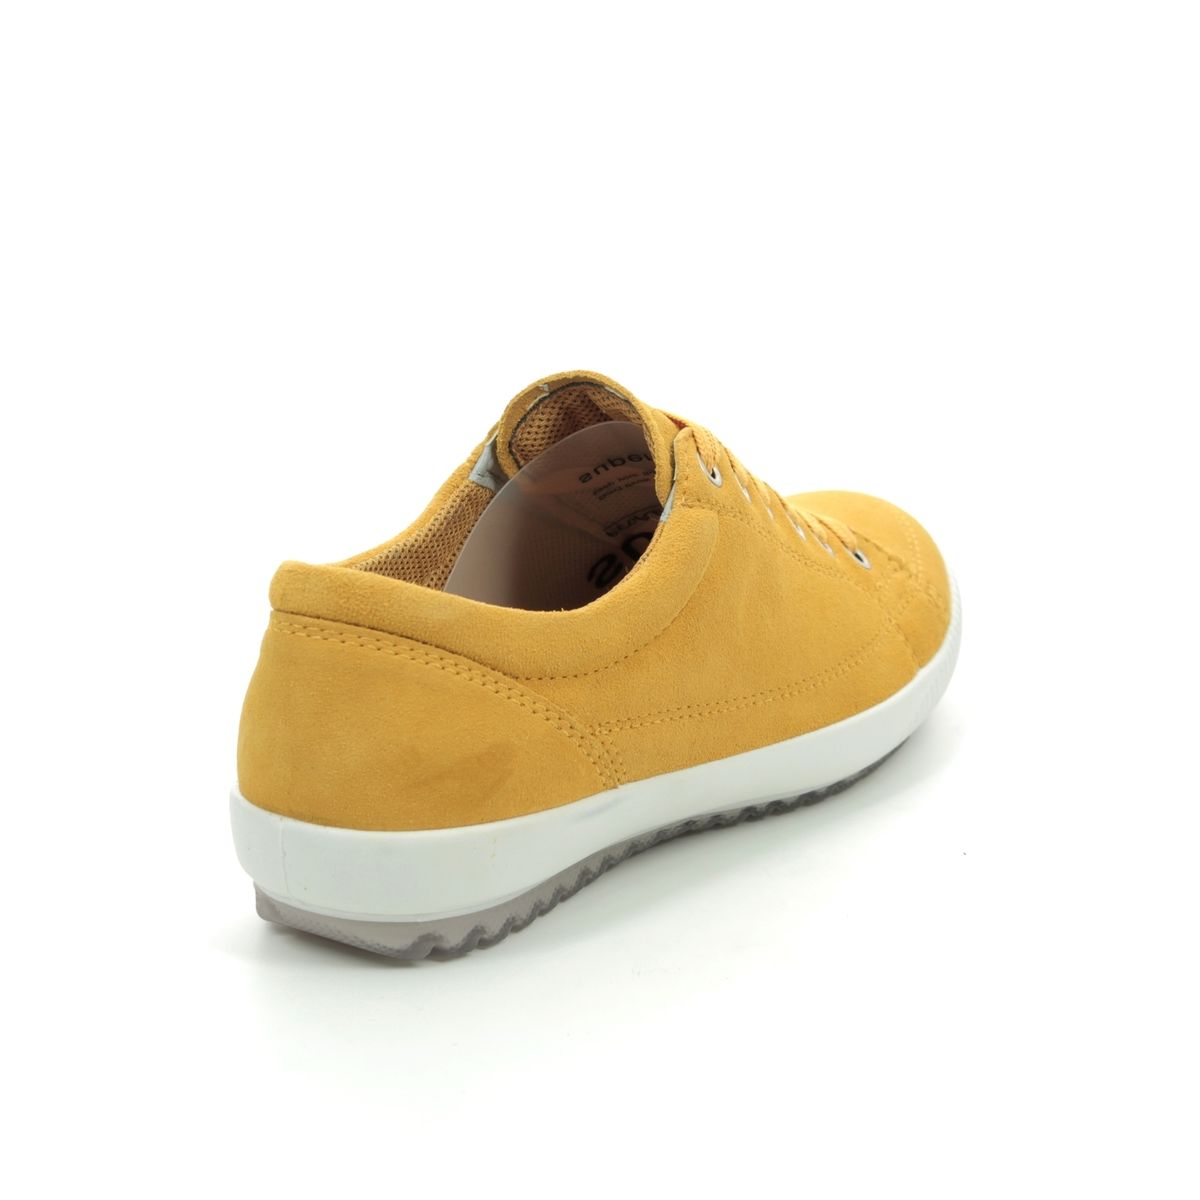 Legero Tanaro Stitch 2 00820-62 Yellow Suede Comfort Slip On Shoes